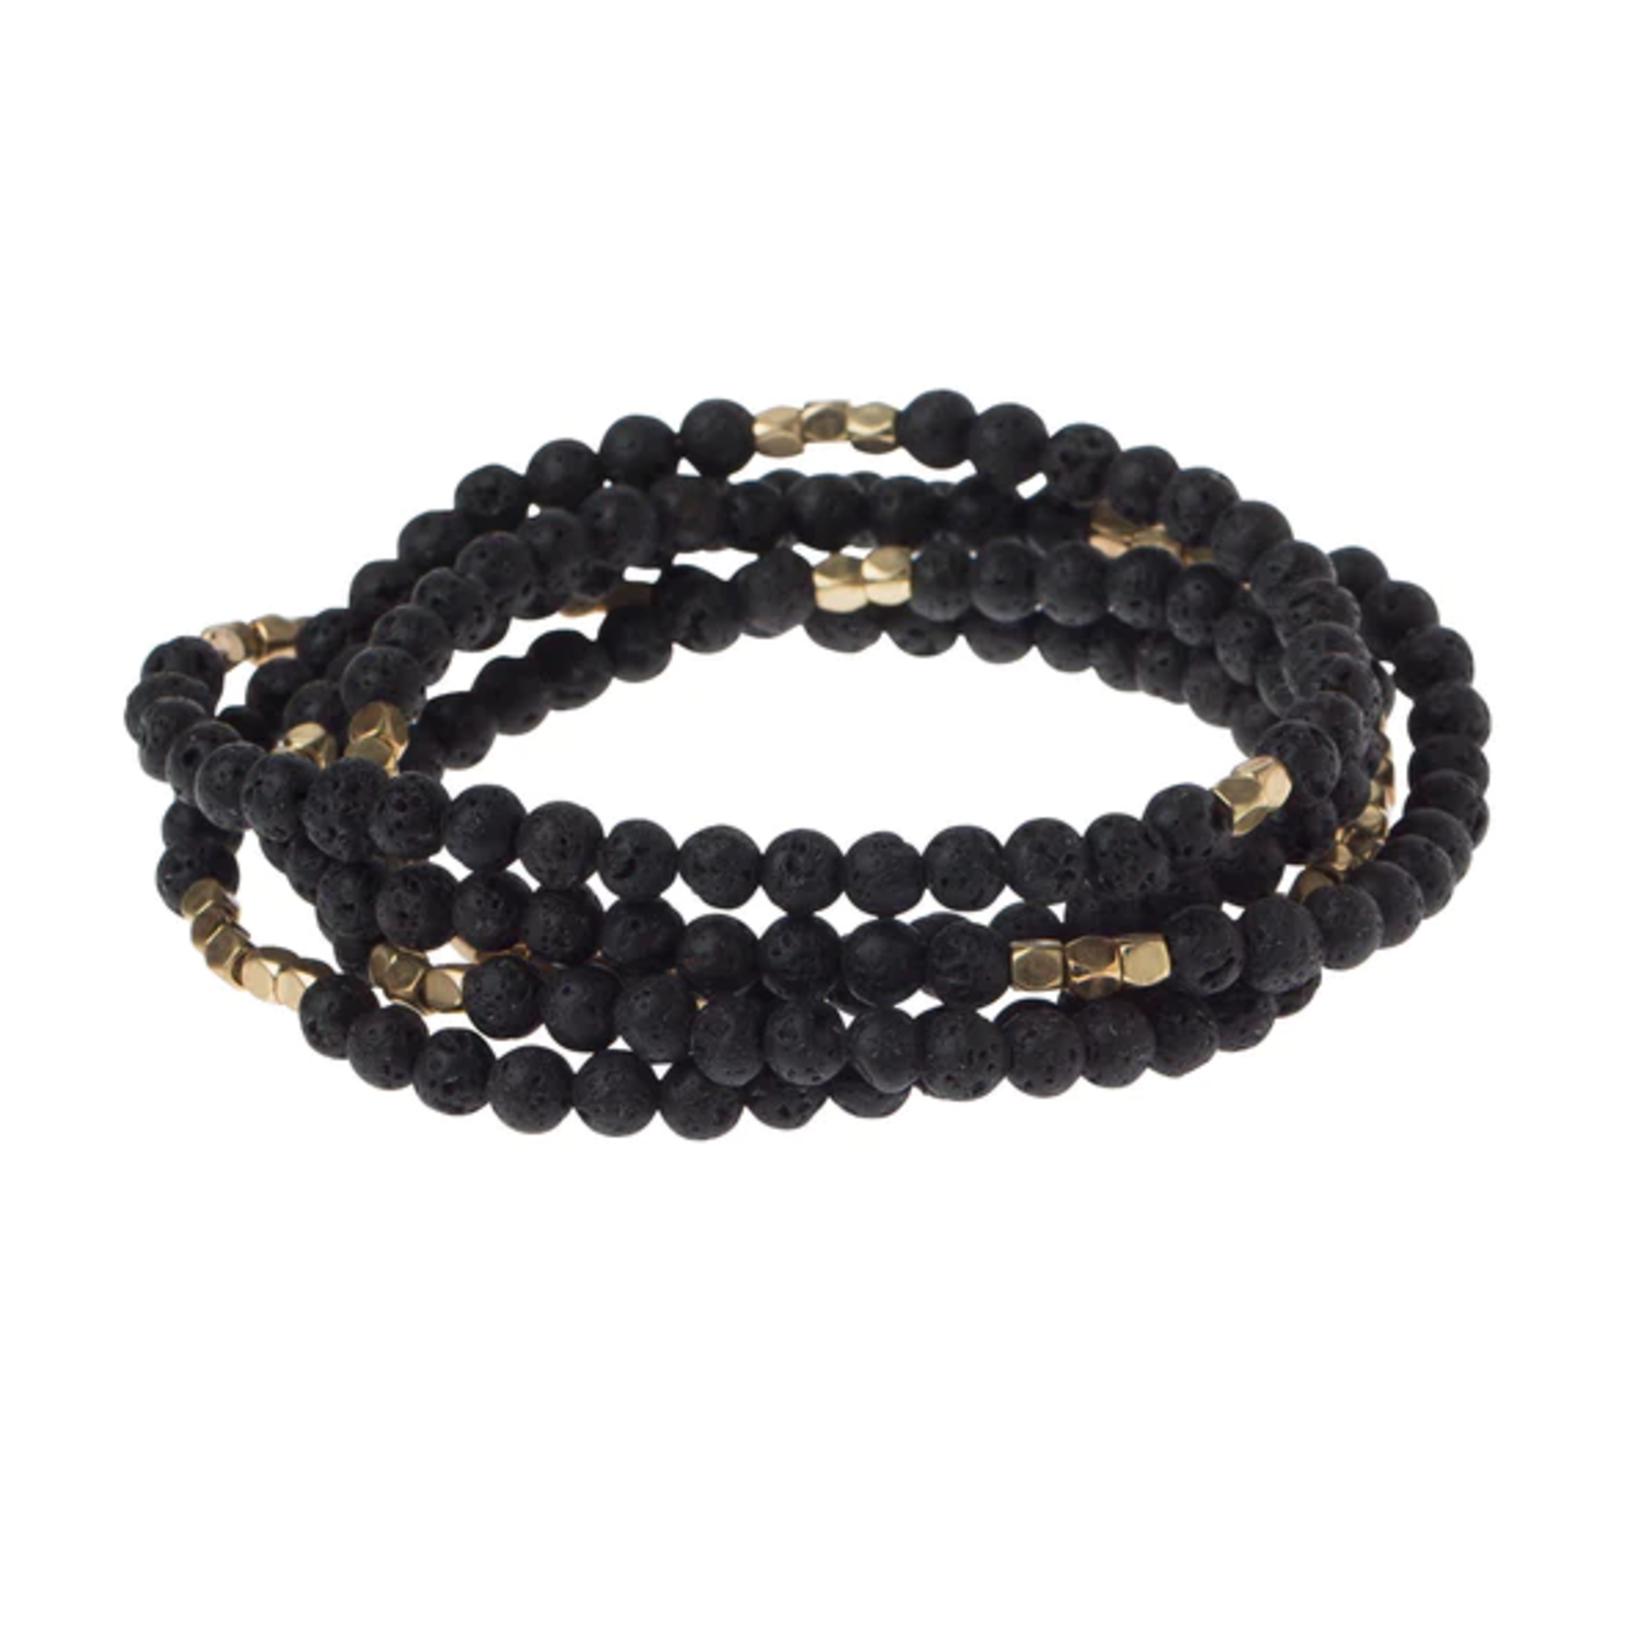 Scout Wrap Bracelet/Necklace Black Lava Stone - Stone of Strength